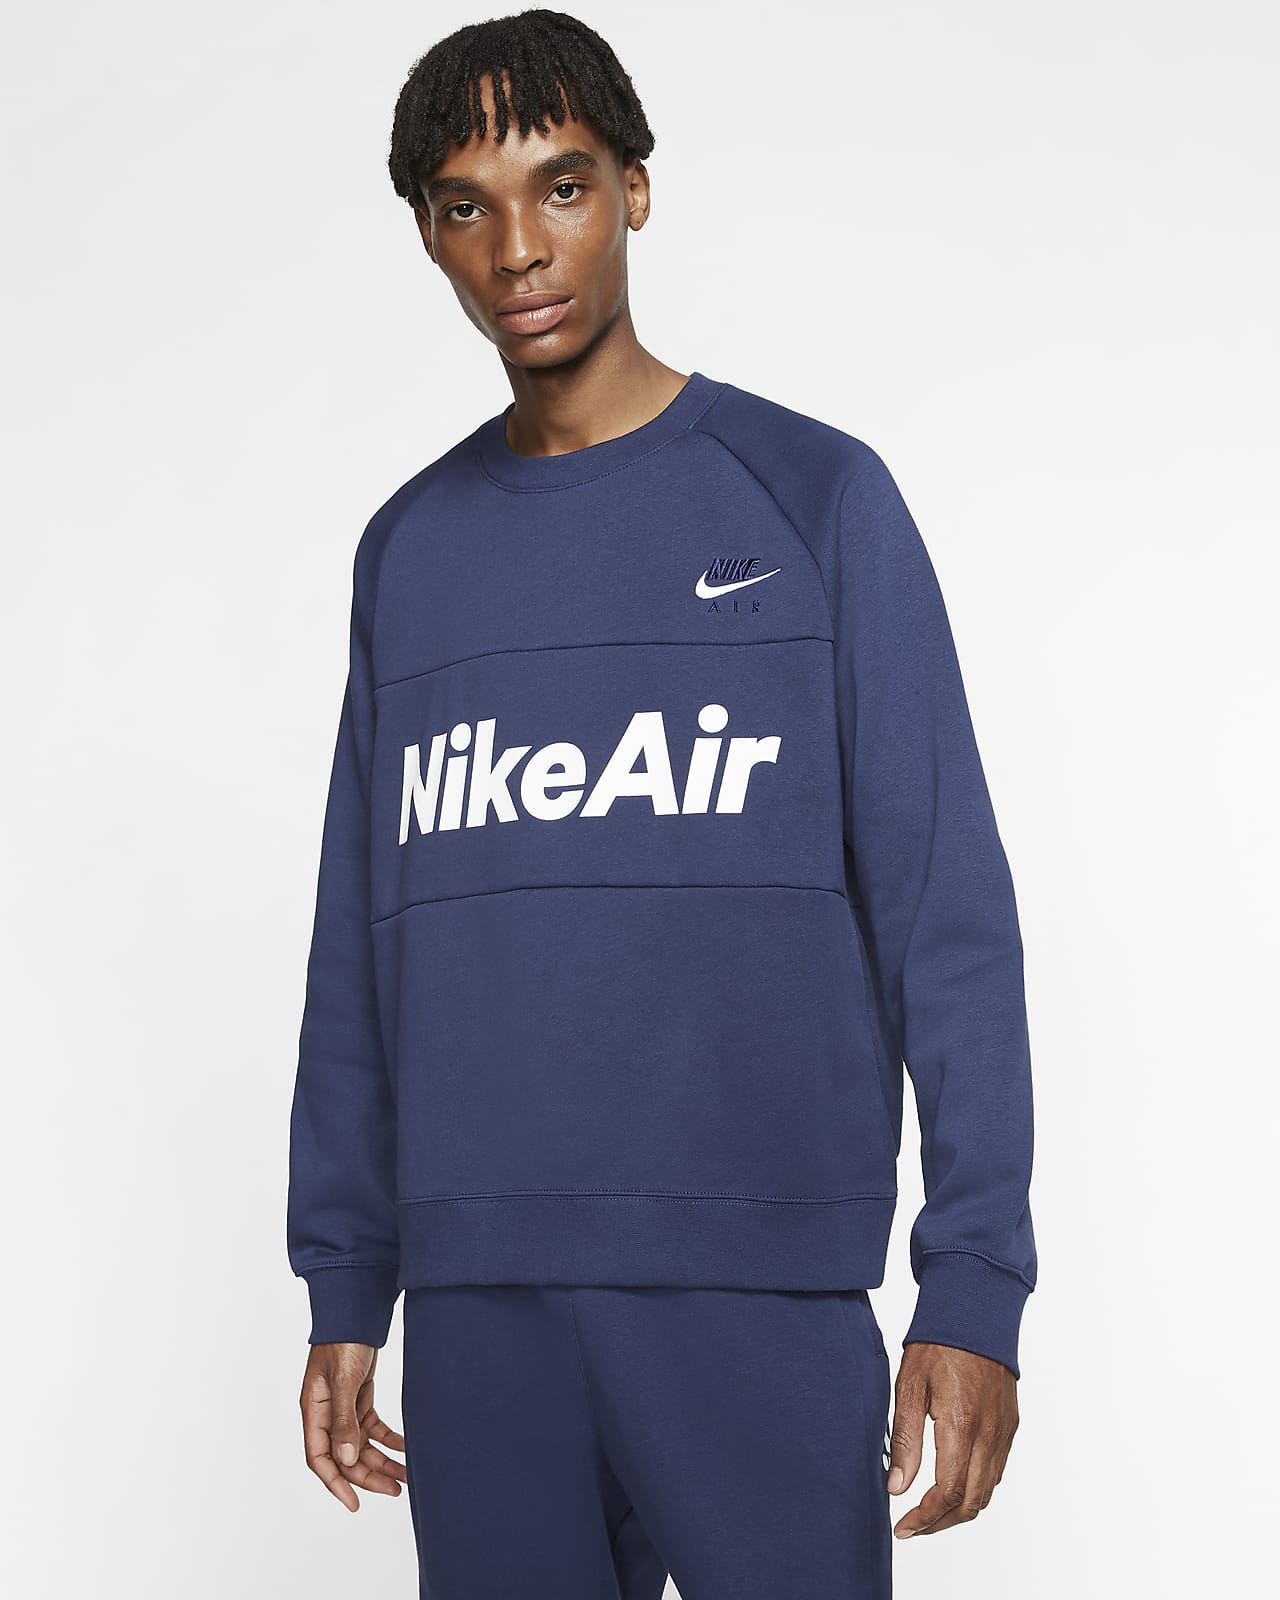 Nike Air Men's Fleece Crew. Nike CZ